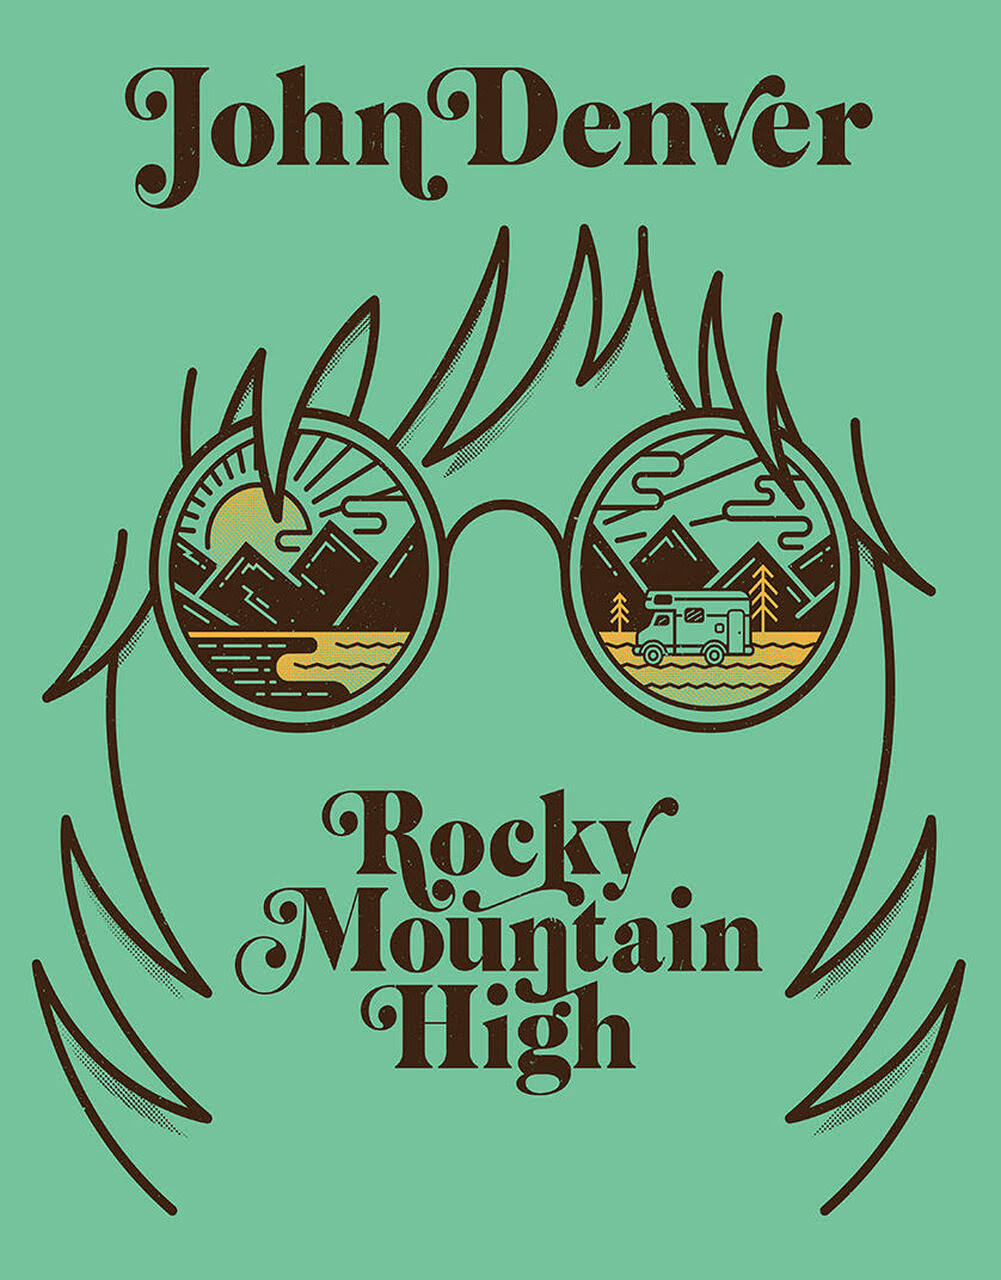 John Denver - Rocky Mountain High Metal Tin Sign - 12.5" x 16"